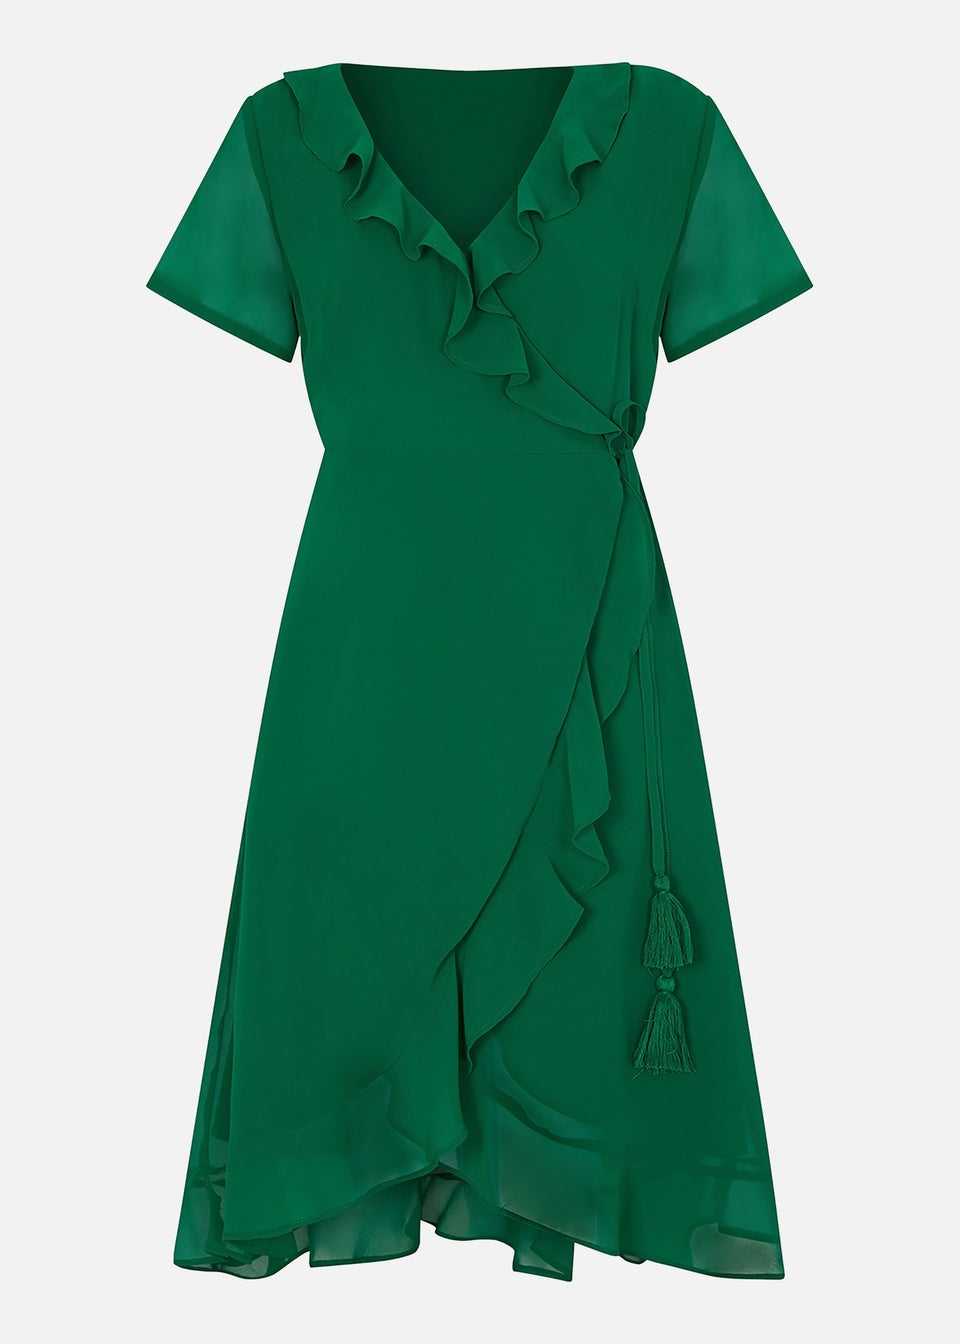 Yumi Green Frill Wrap Dress